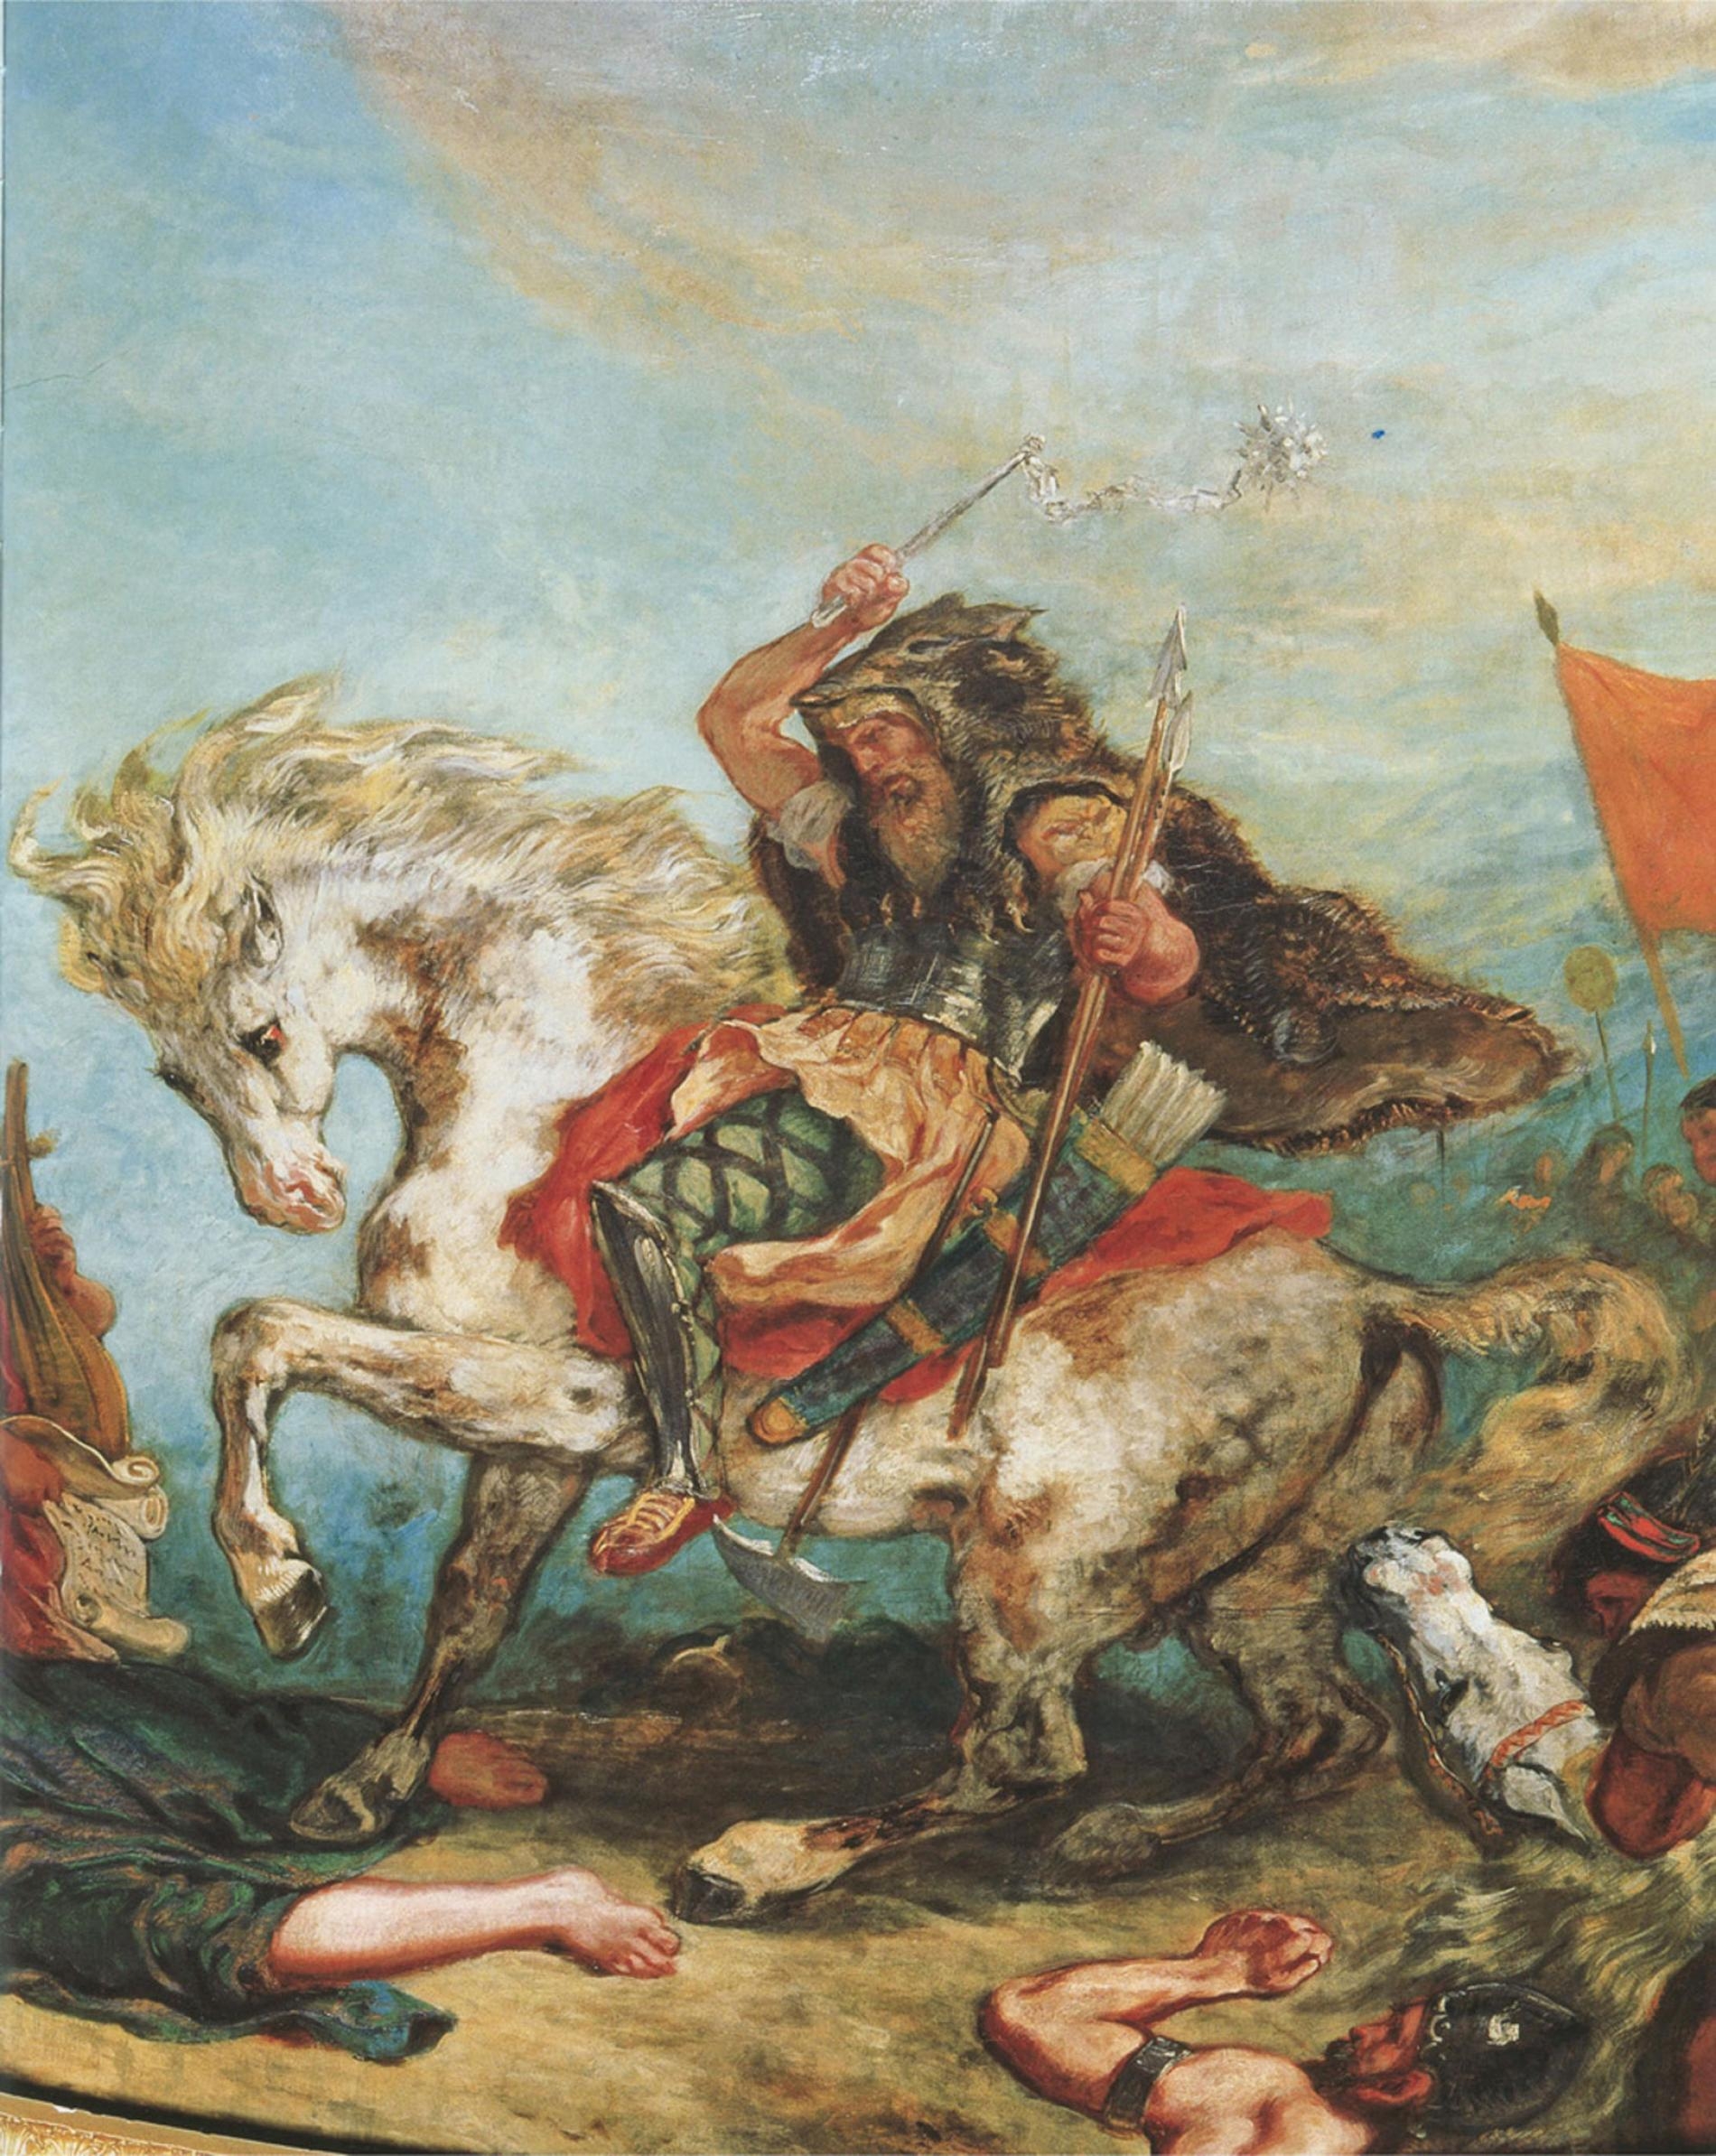 在法國畫家德拉克洛瓦（Eugene Delacroix）的畫作中，匈人阿提拉（Attila the Hun ）與他的手下從馬背上攻擊敵人。PHOTOGRAPH BY THE PICTURE ART COLLECTION, ALAMY